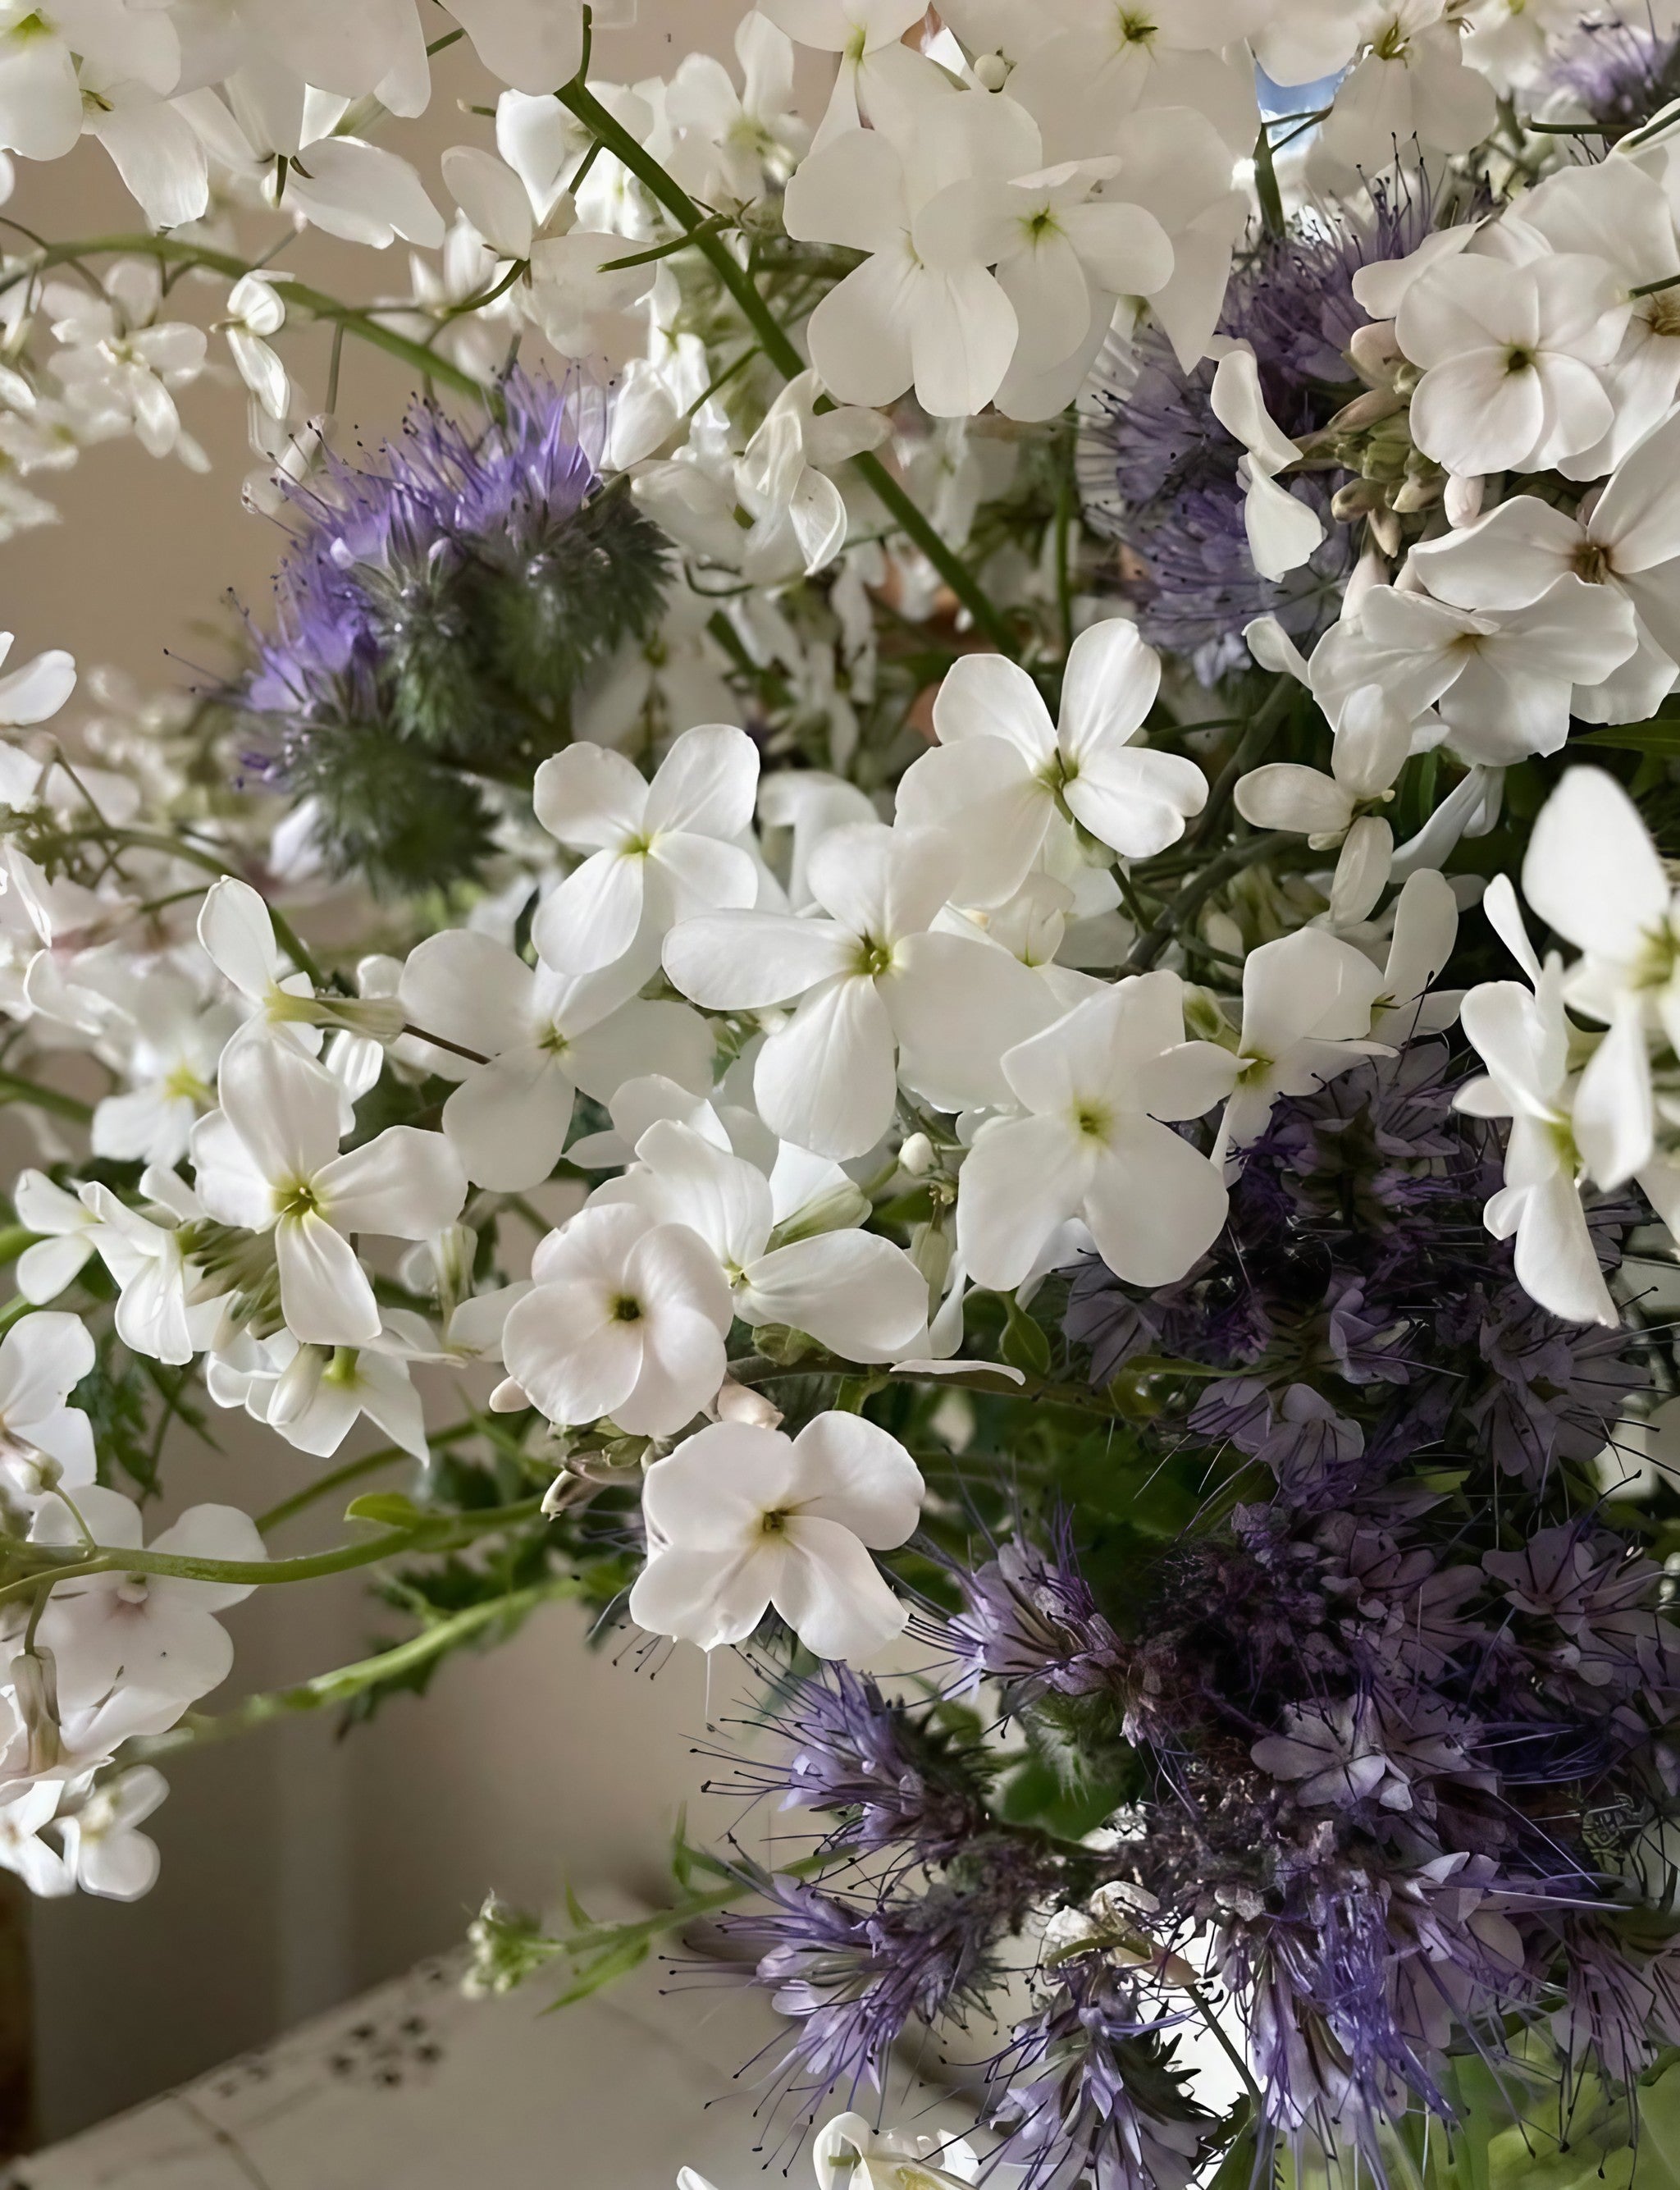 Arrangement of Hesperis matronalis White flowers in a vase